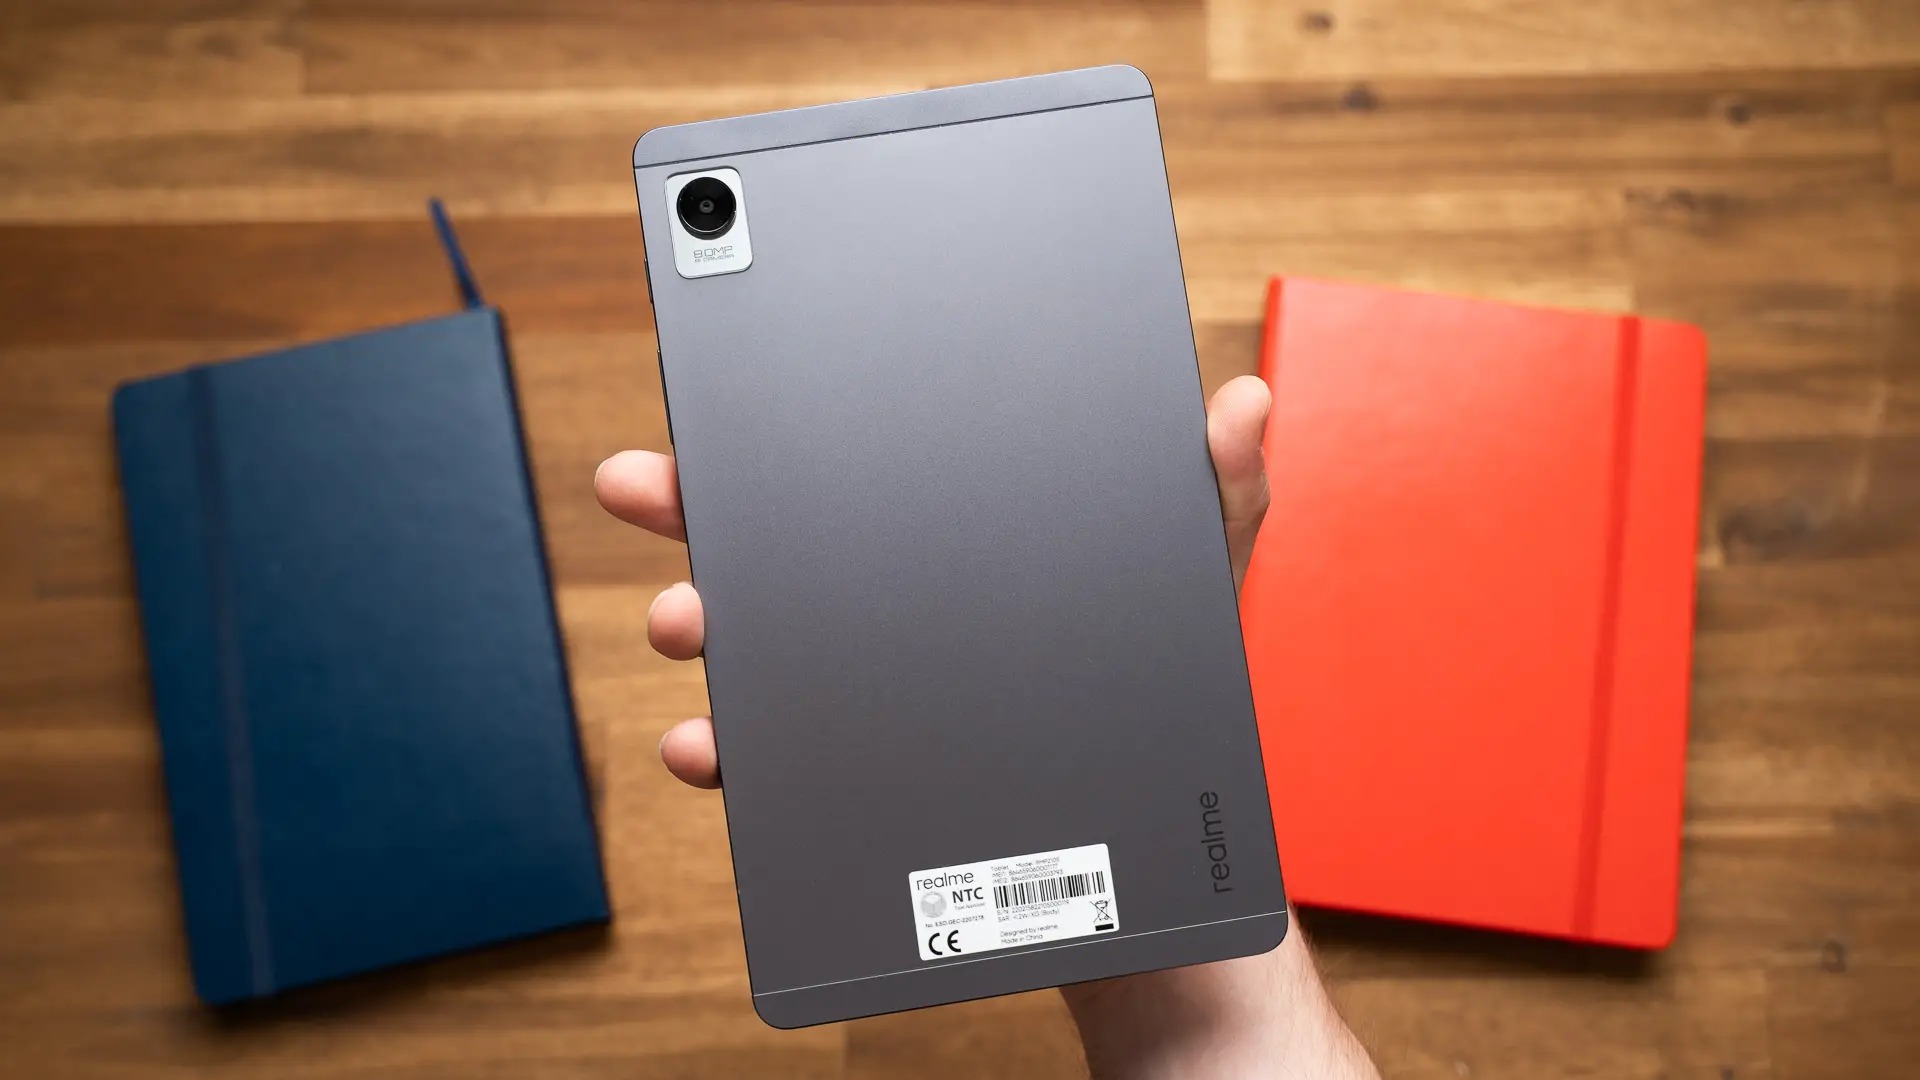 Lenovo Tab M8 HD, 8 Inch High Def Tablet